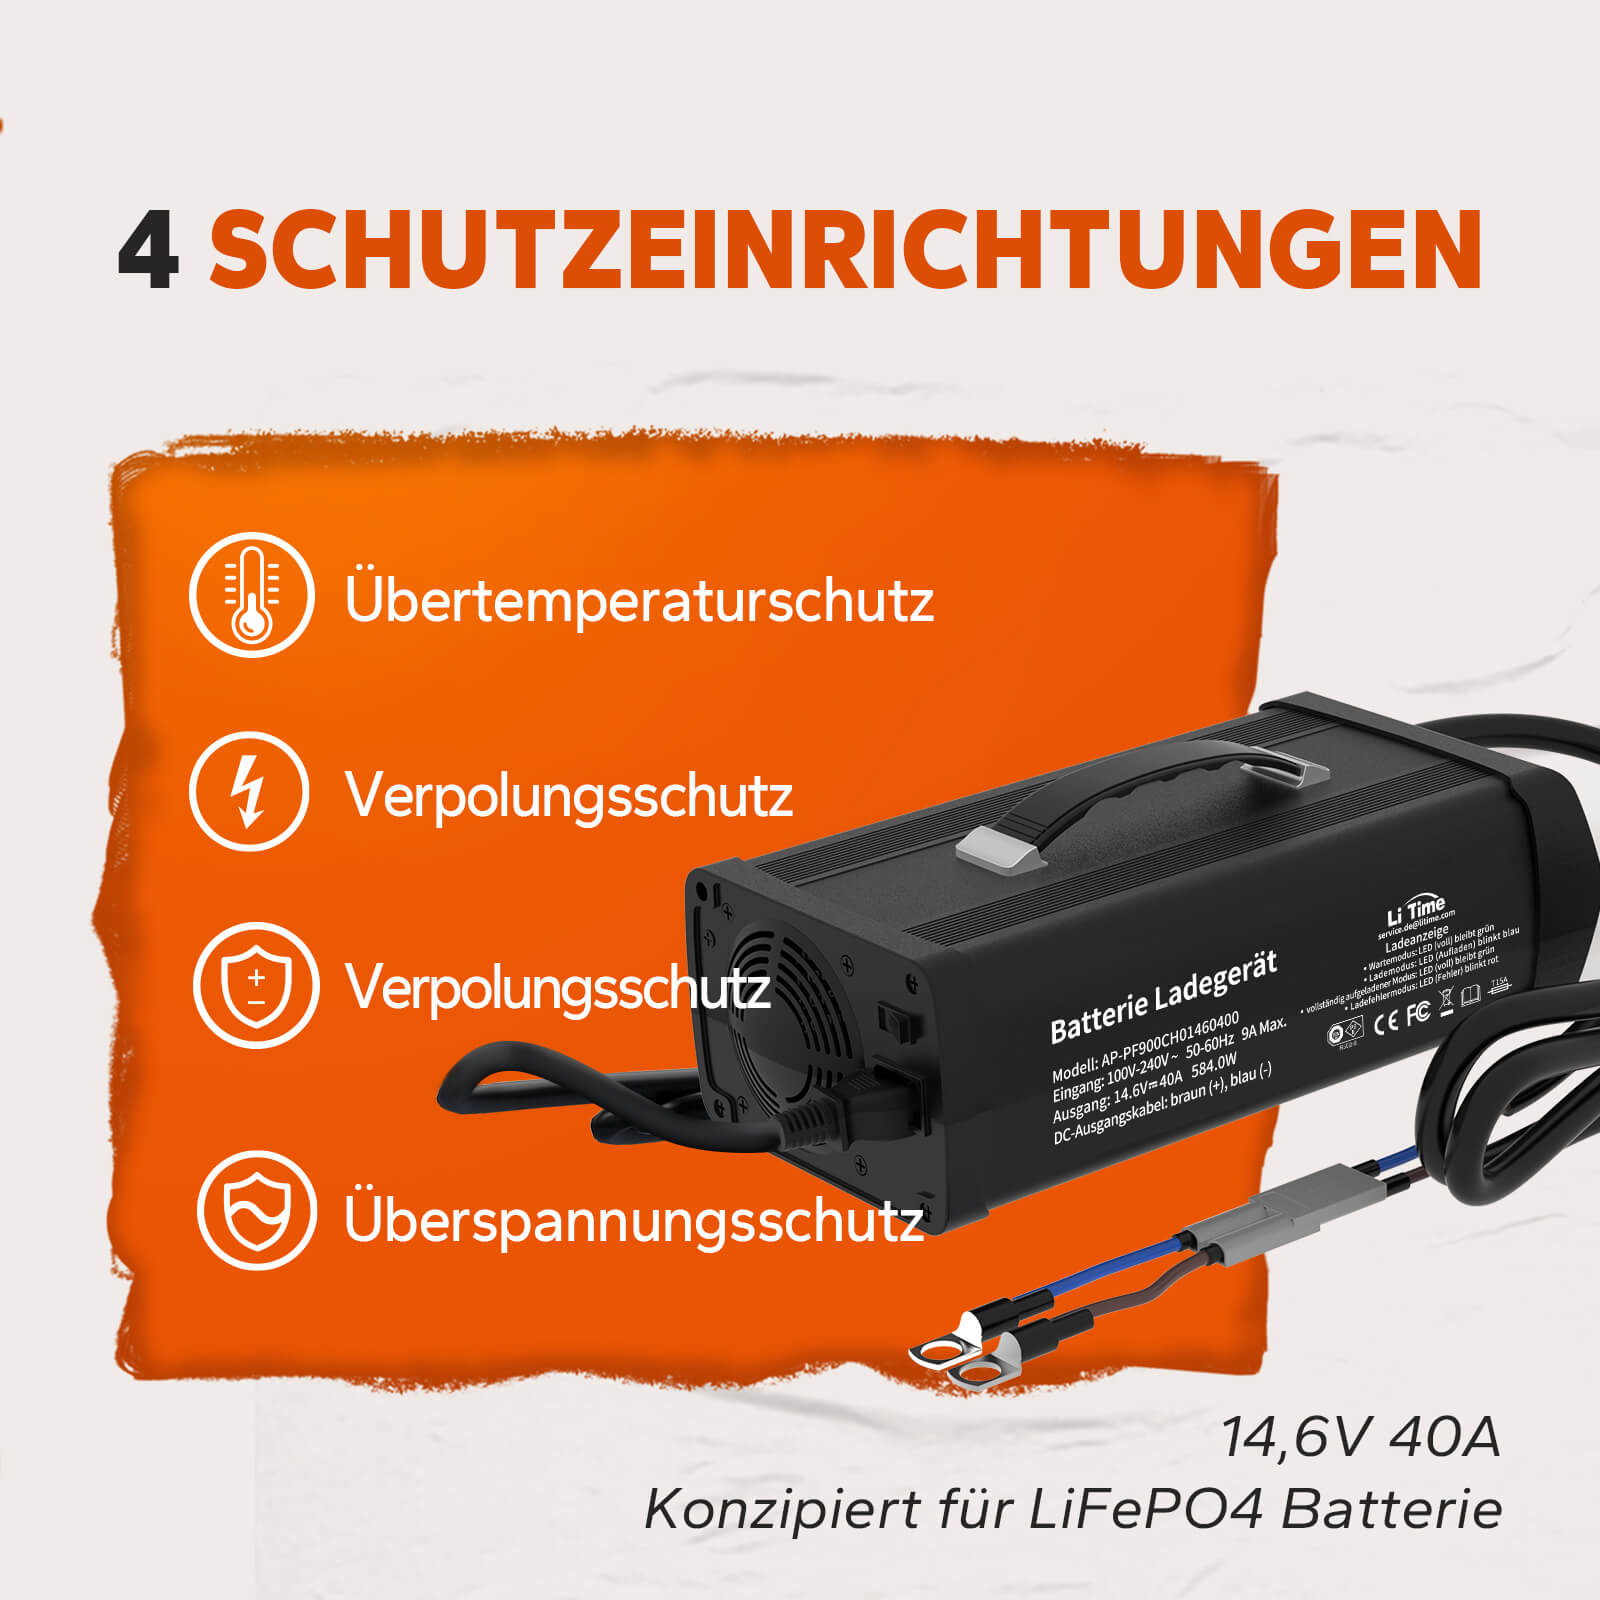 LiTime 14.6V 40A lithium battery charger for 12V LiFePO4 lithium batte –  LiTime-DE